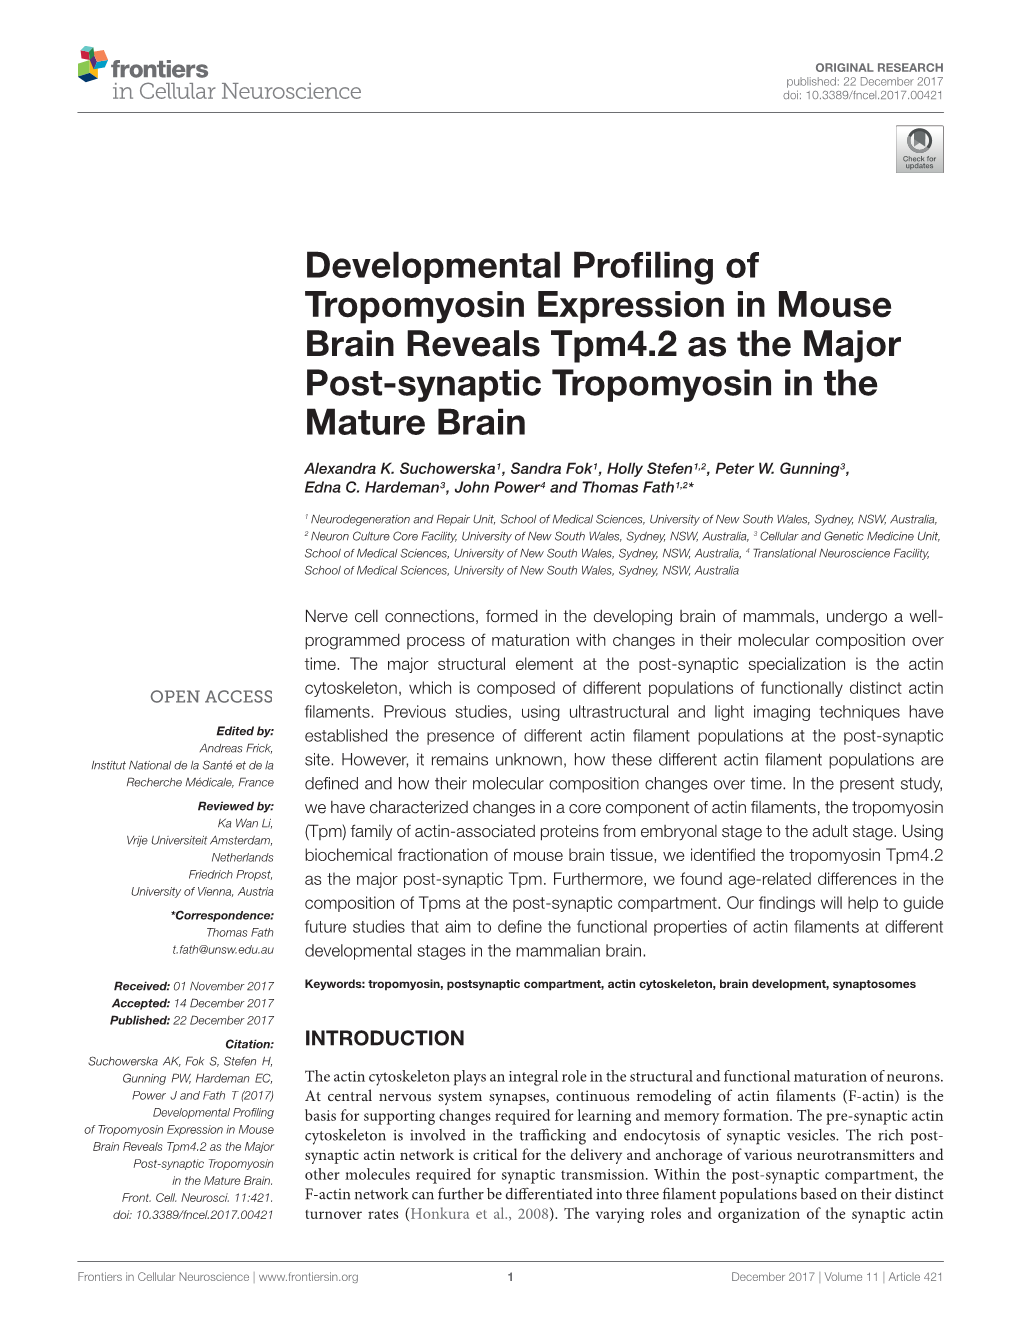 Developmental Profiling of Tropomyosin